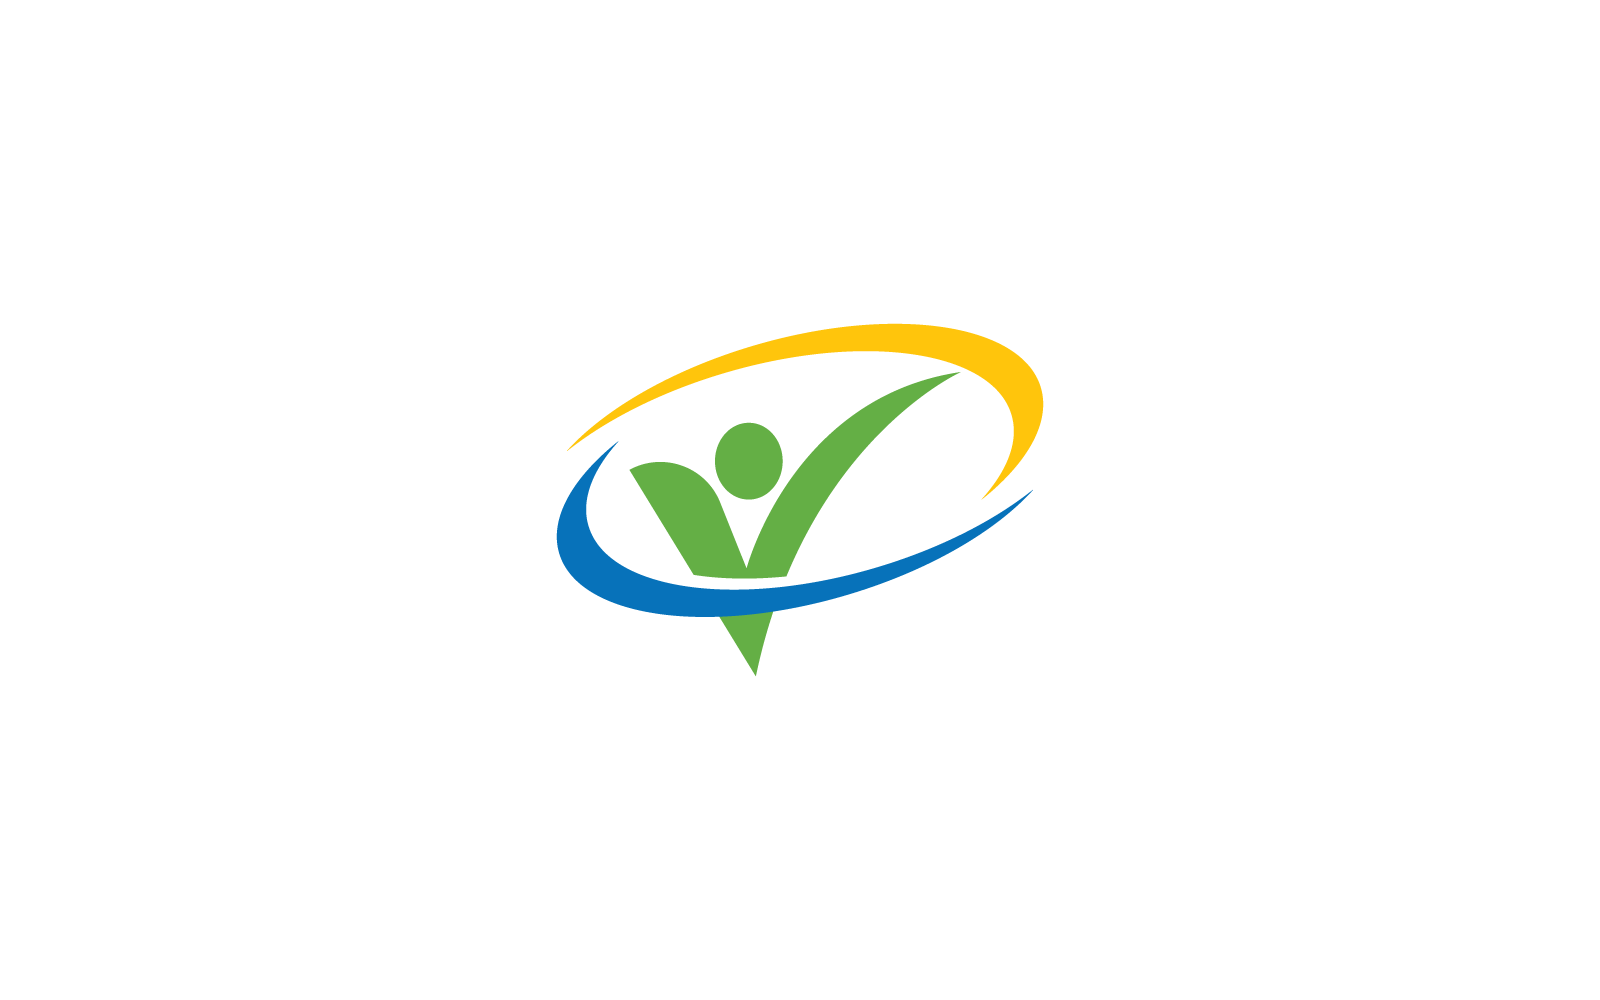 Healthy Life people illustration vector logo design